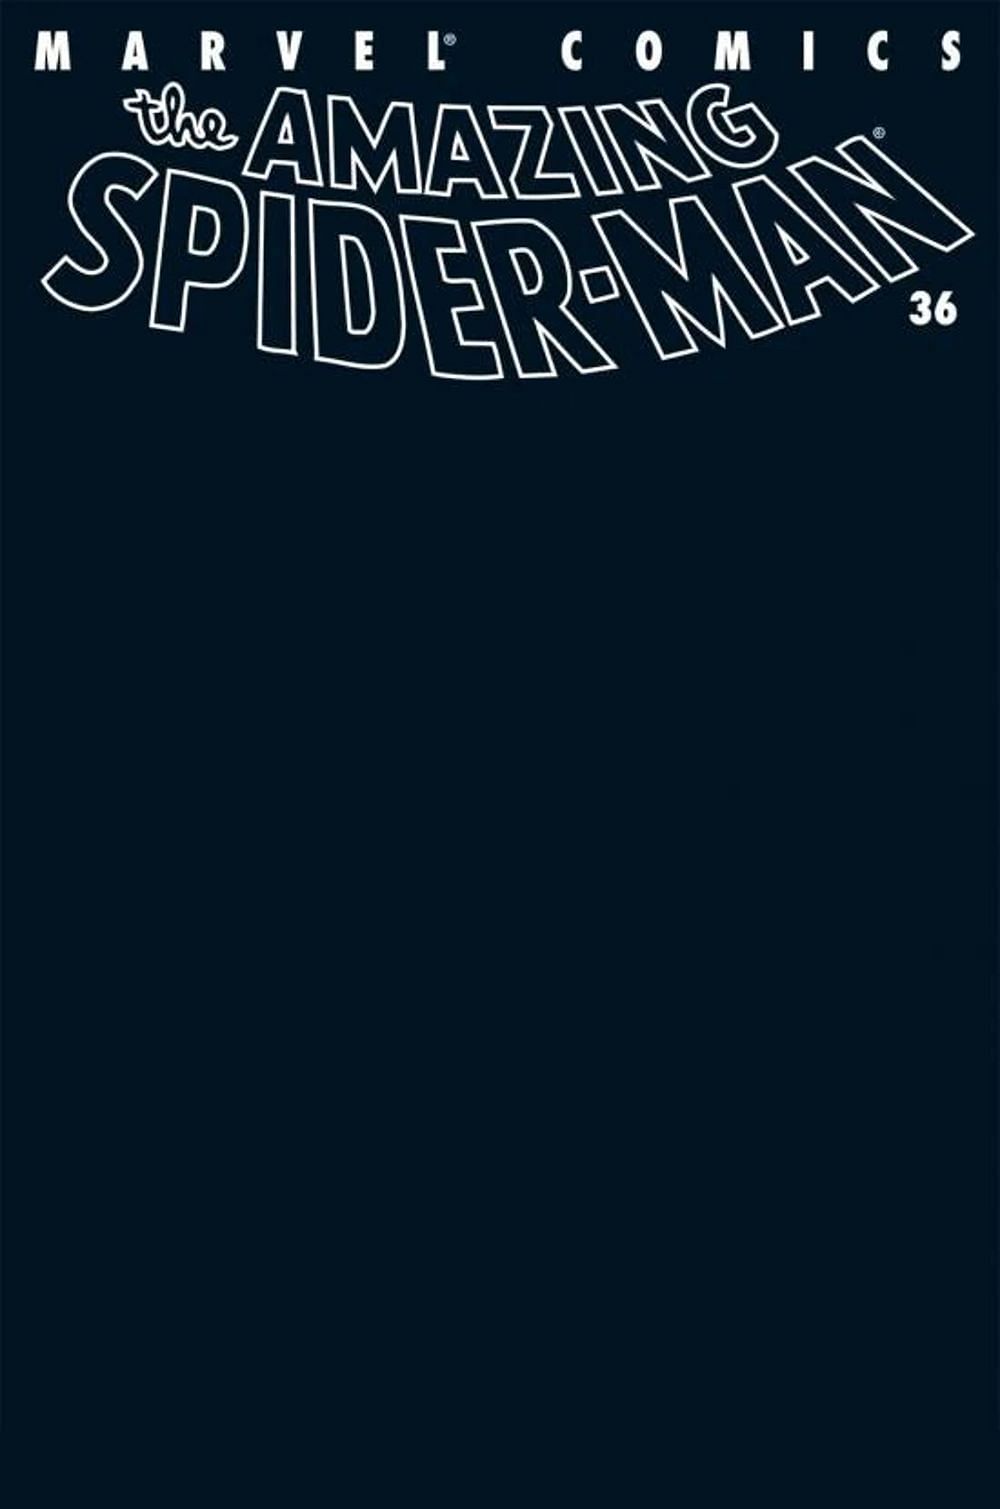 Amazing Spider-Man Volume 2 #36 cover (Image via Marvel Comics)